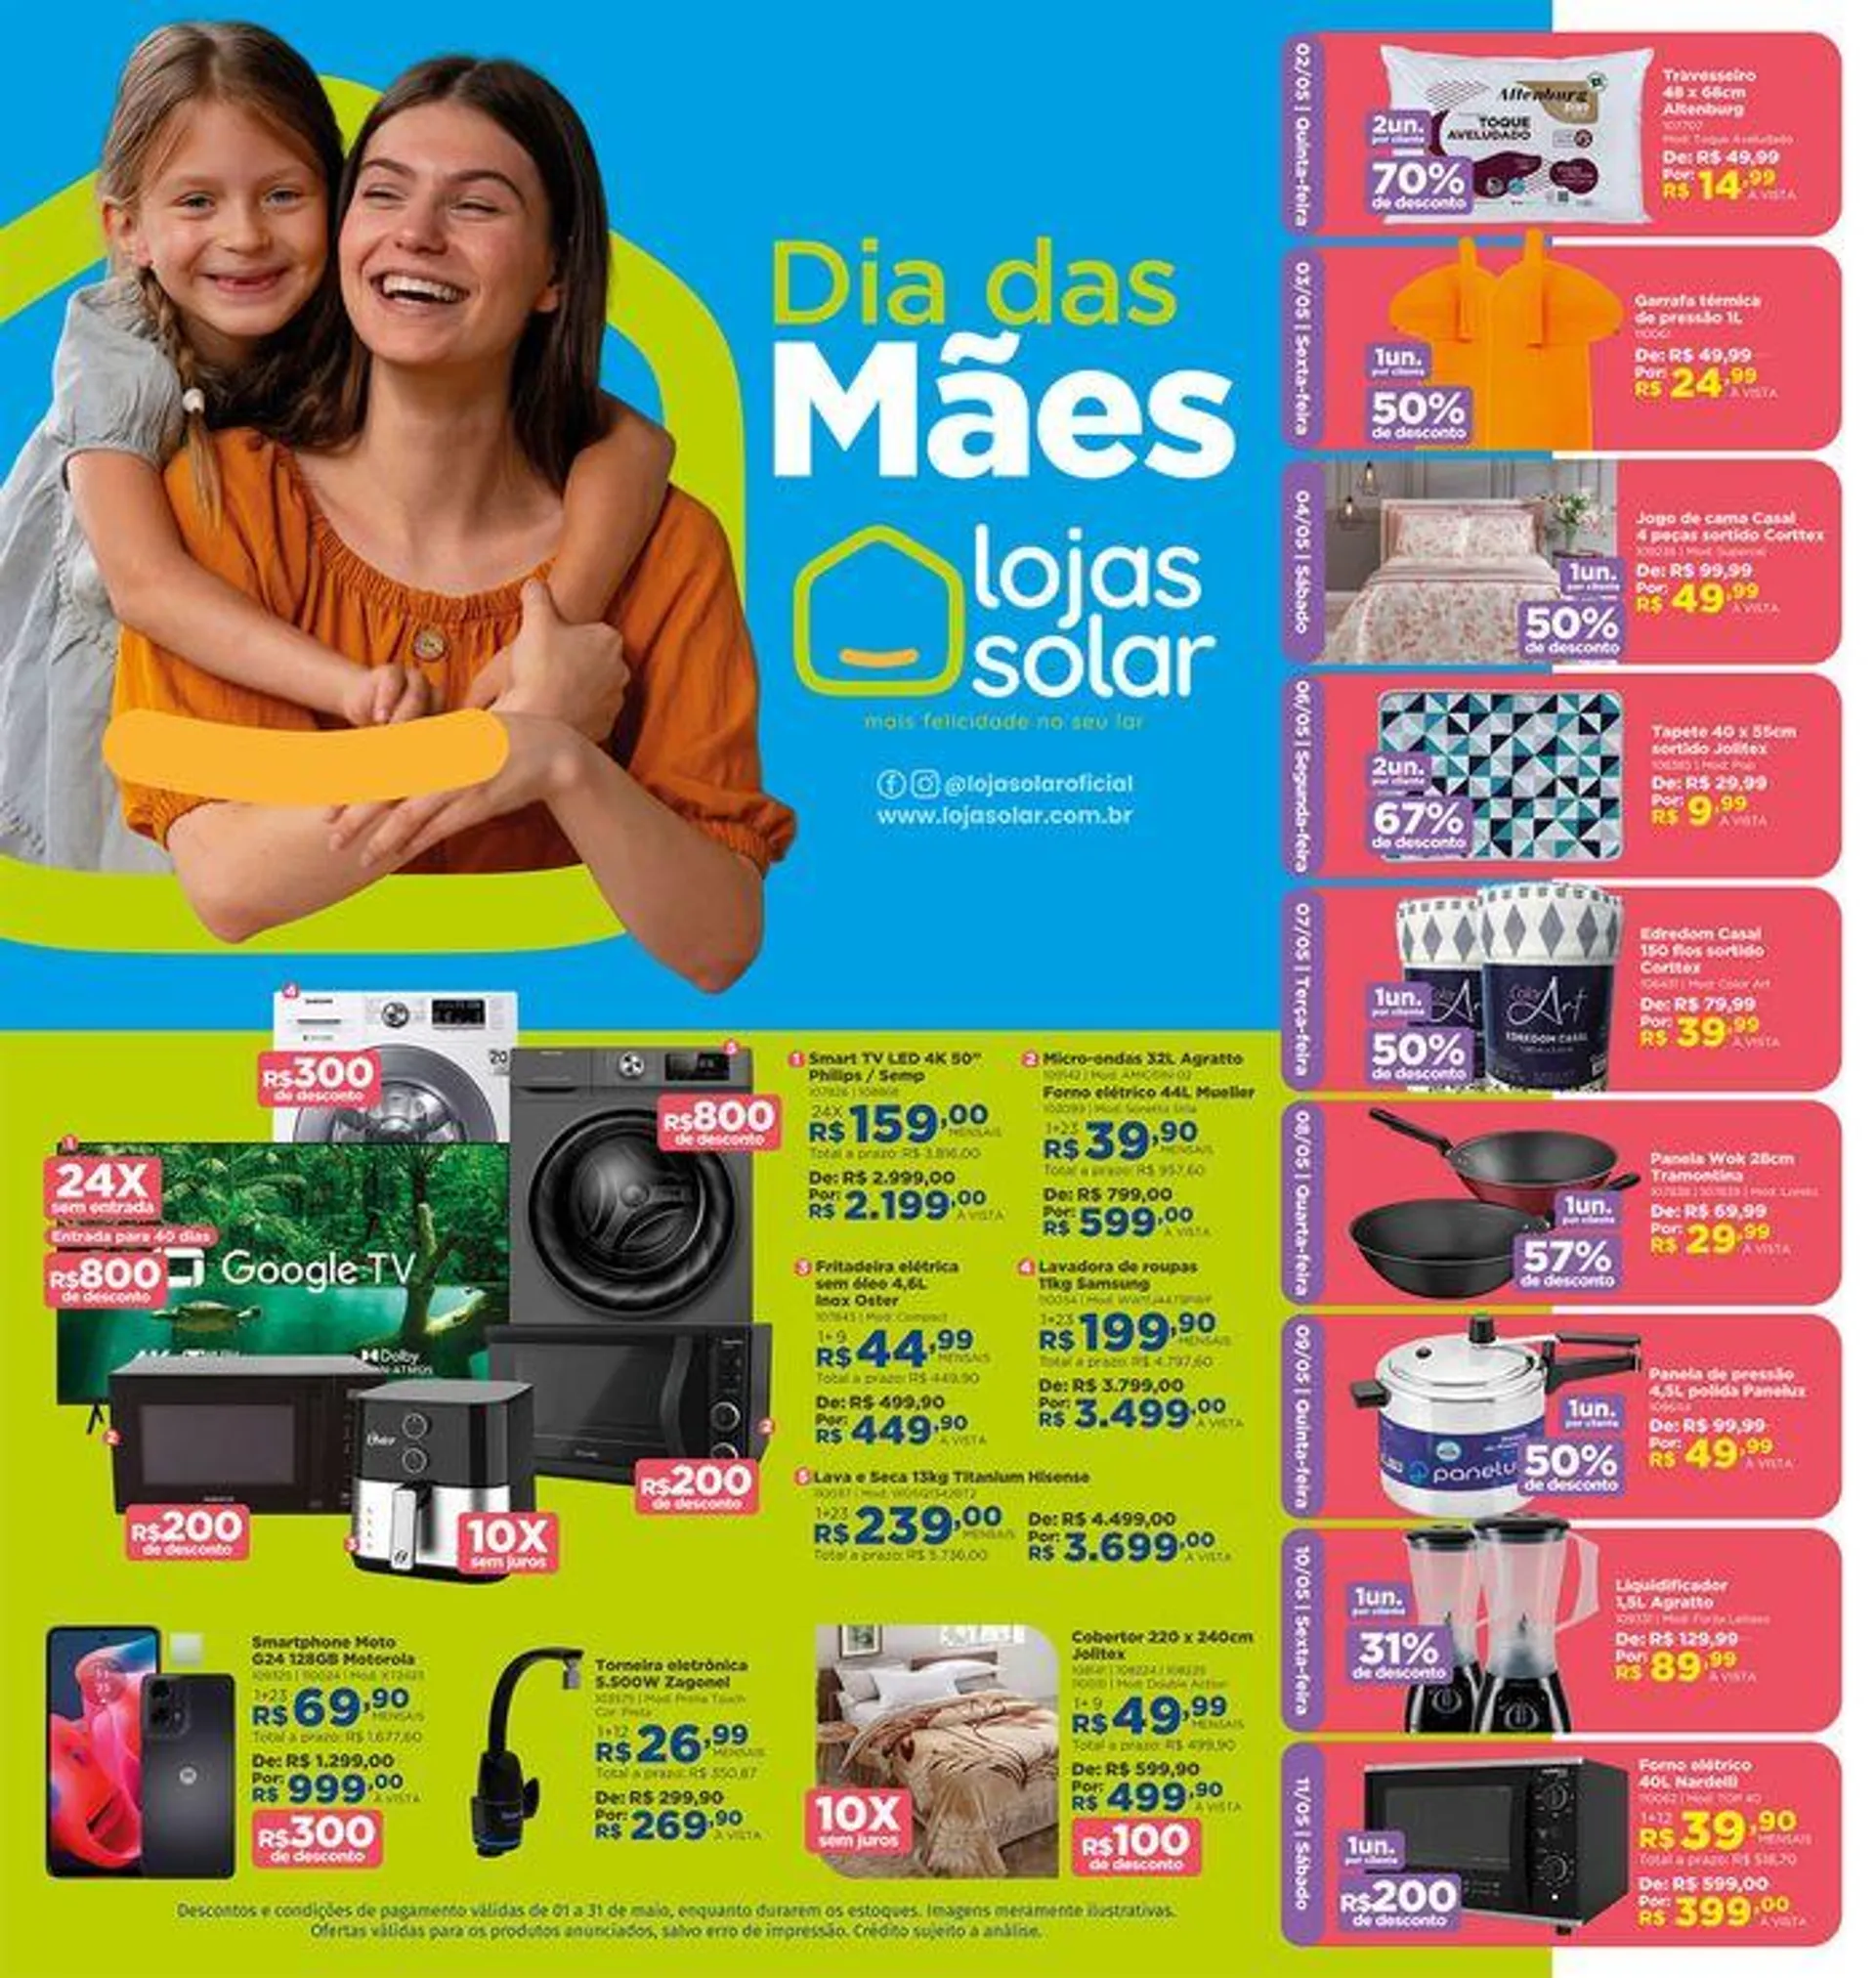 Ofertas Lojas Solar - 1